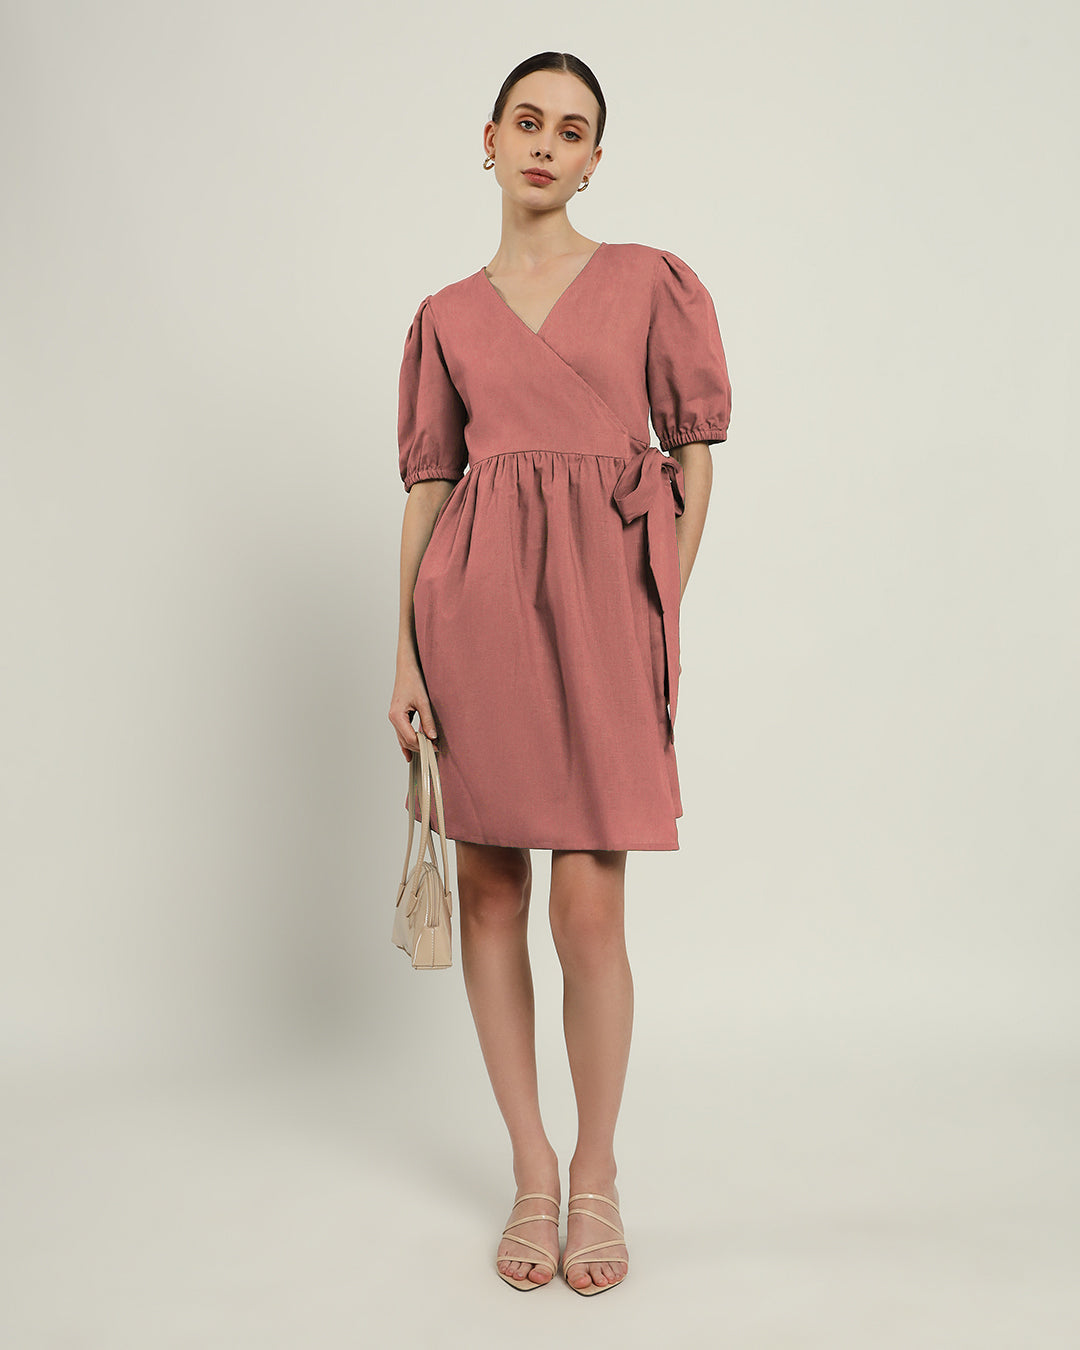 The Inzai Ivory Pink Cotton Dress